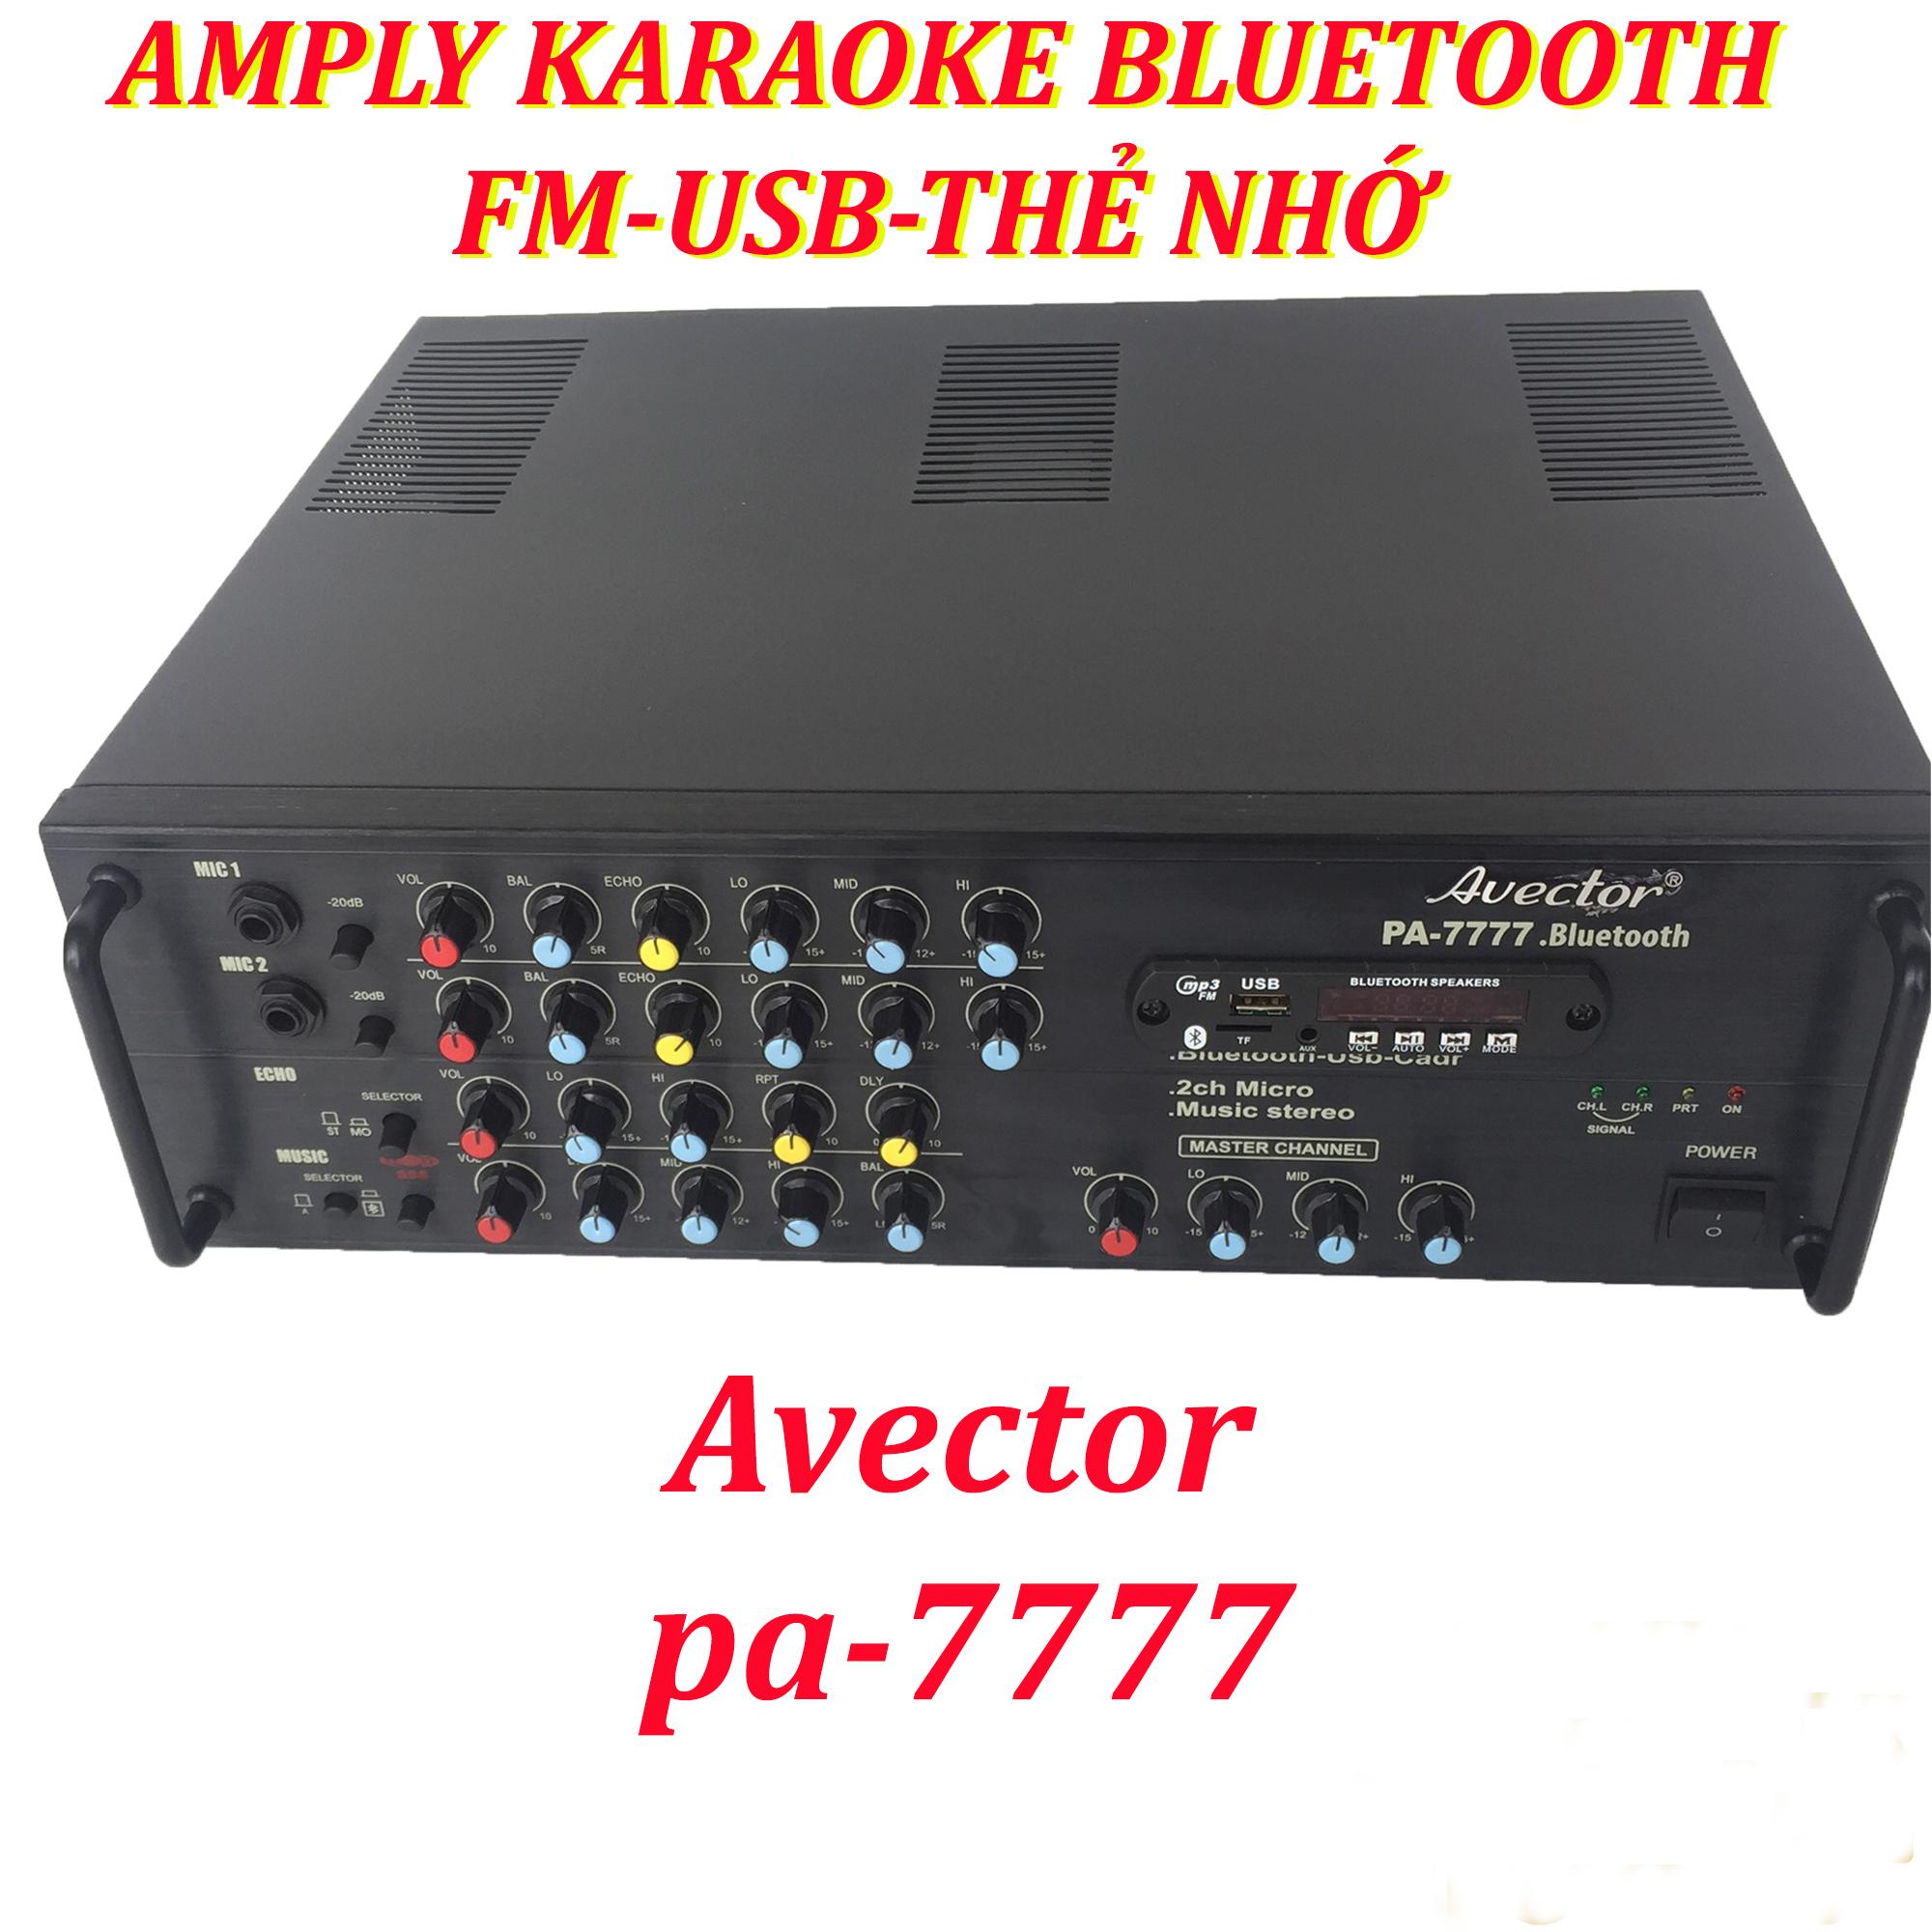 Amply karaoke bluetooth ampli karaoke gia đình Avector 7777 hát karaoke cực hay